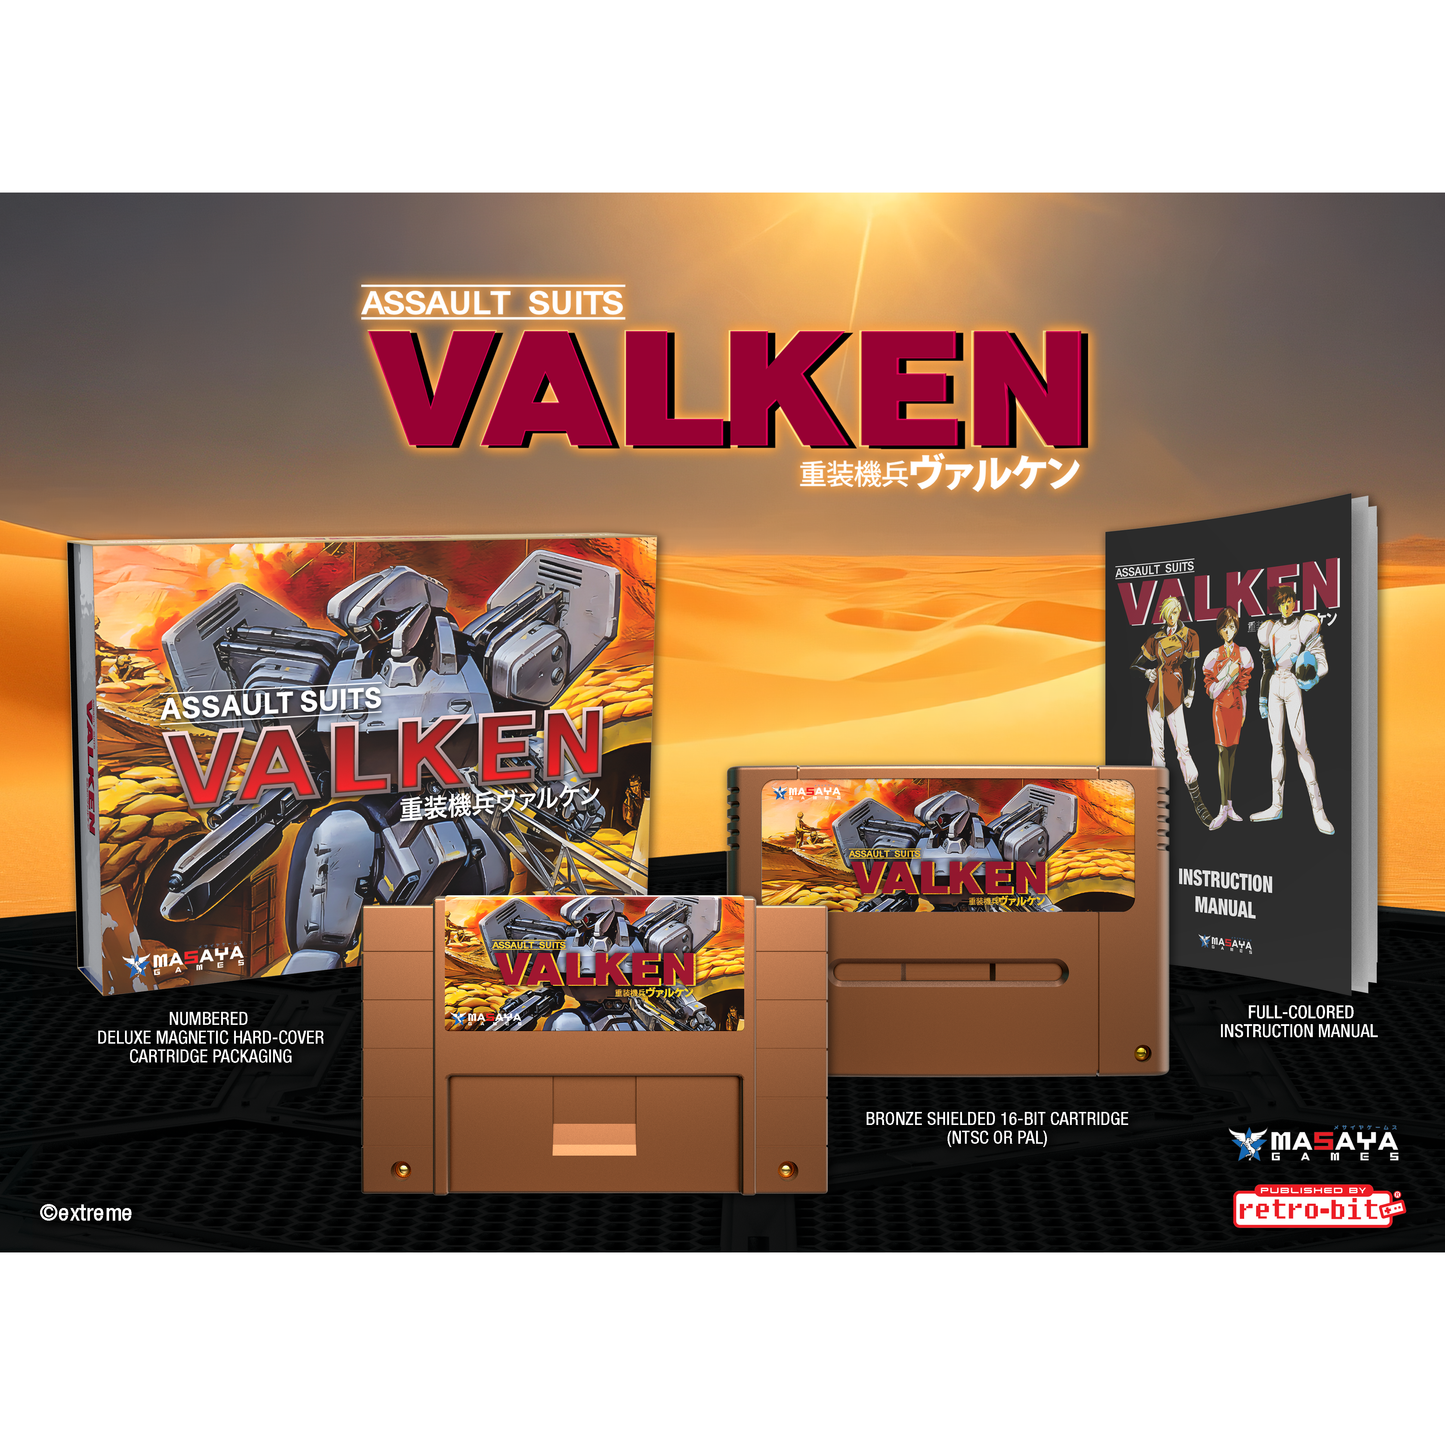 Assault Suits Valken: Collectors Edition